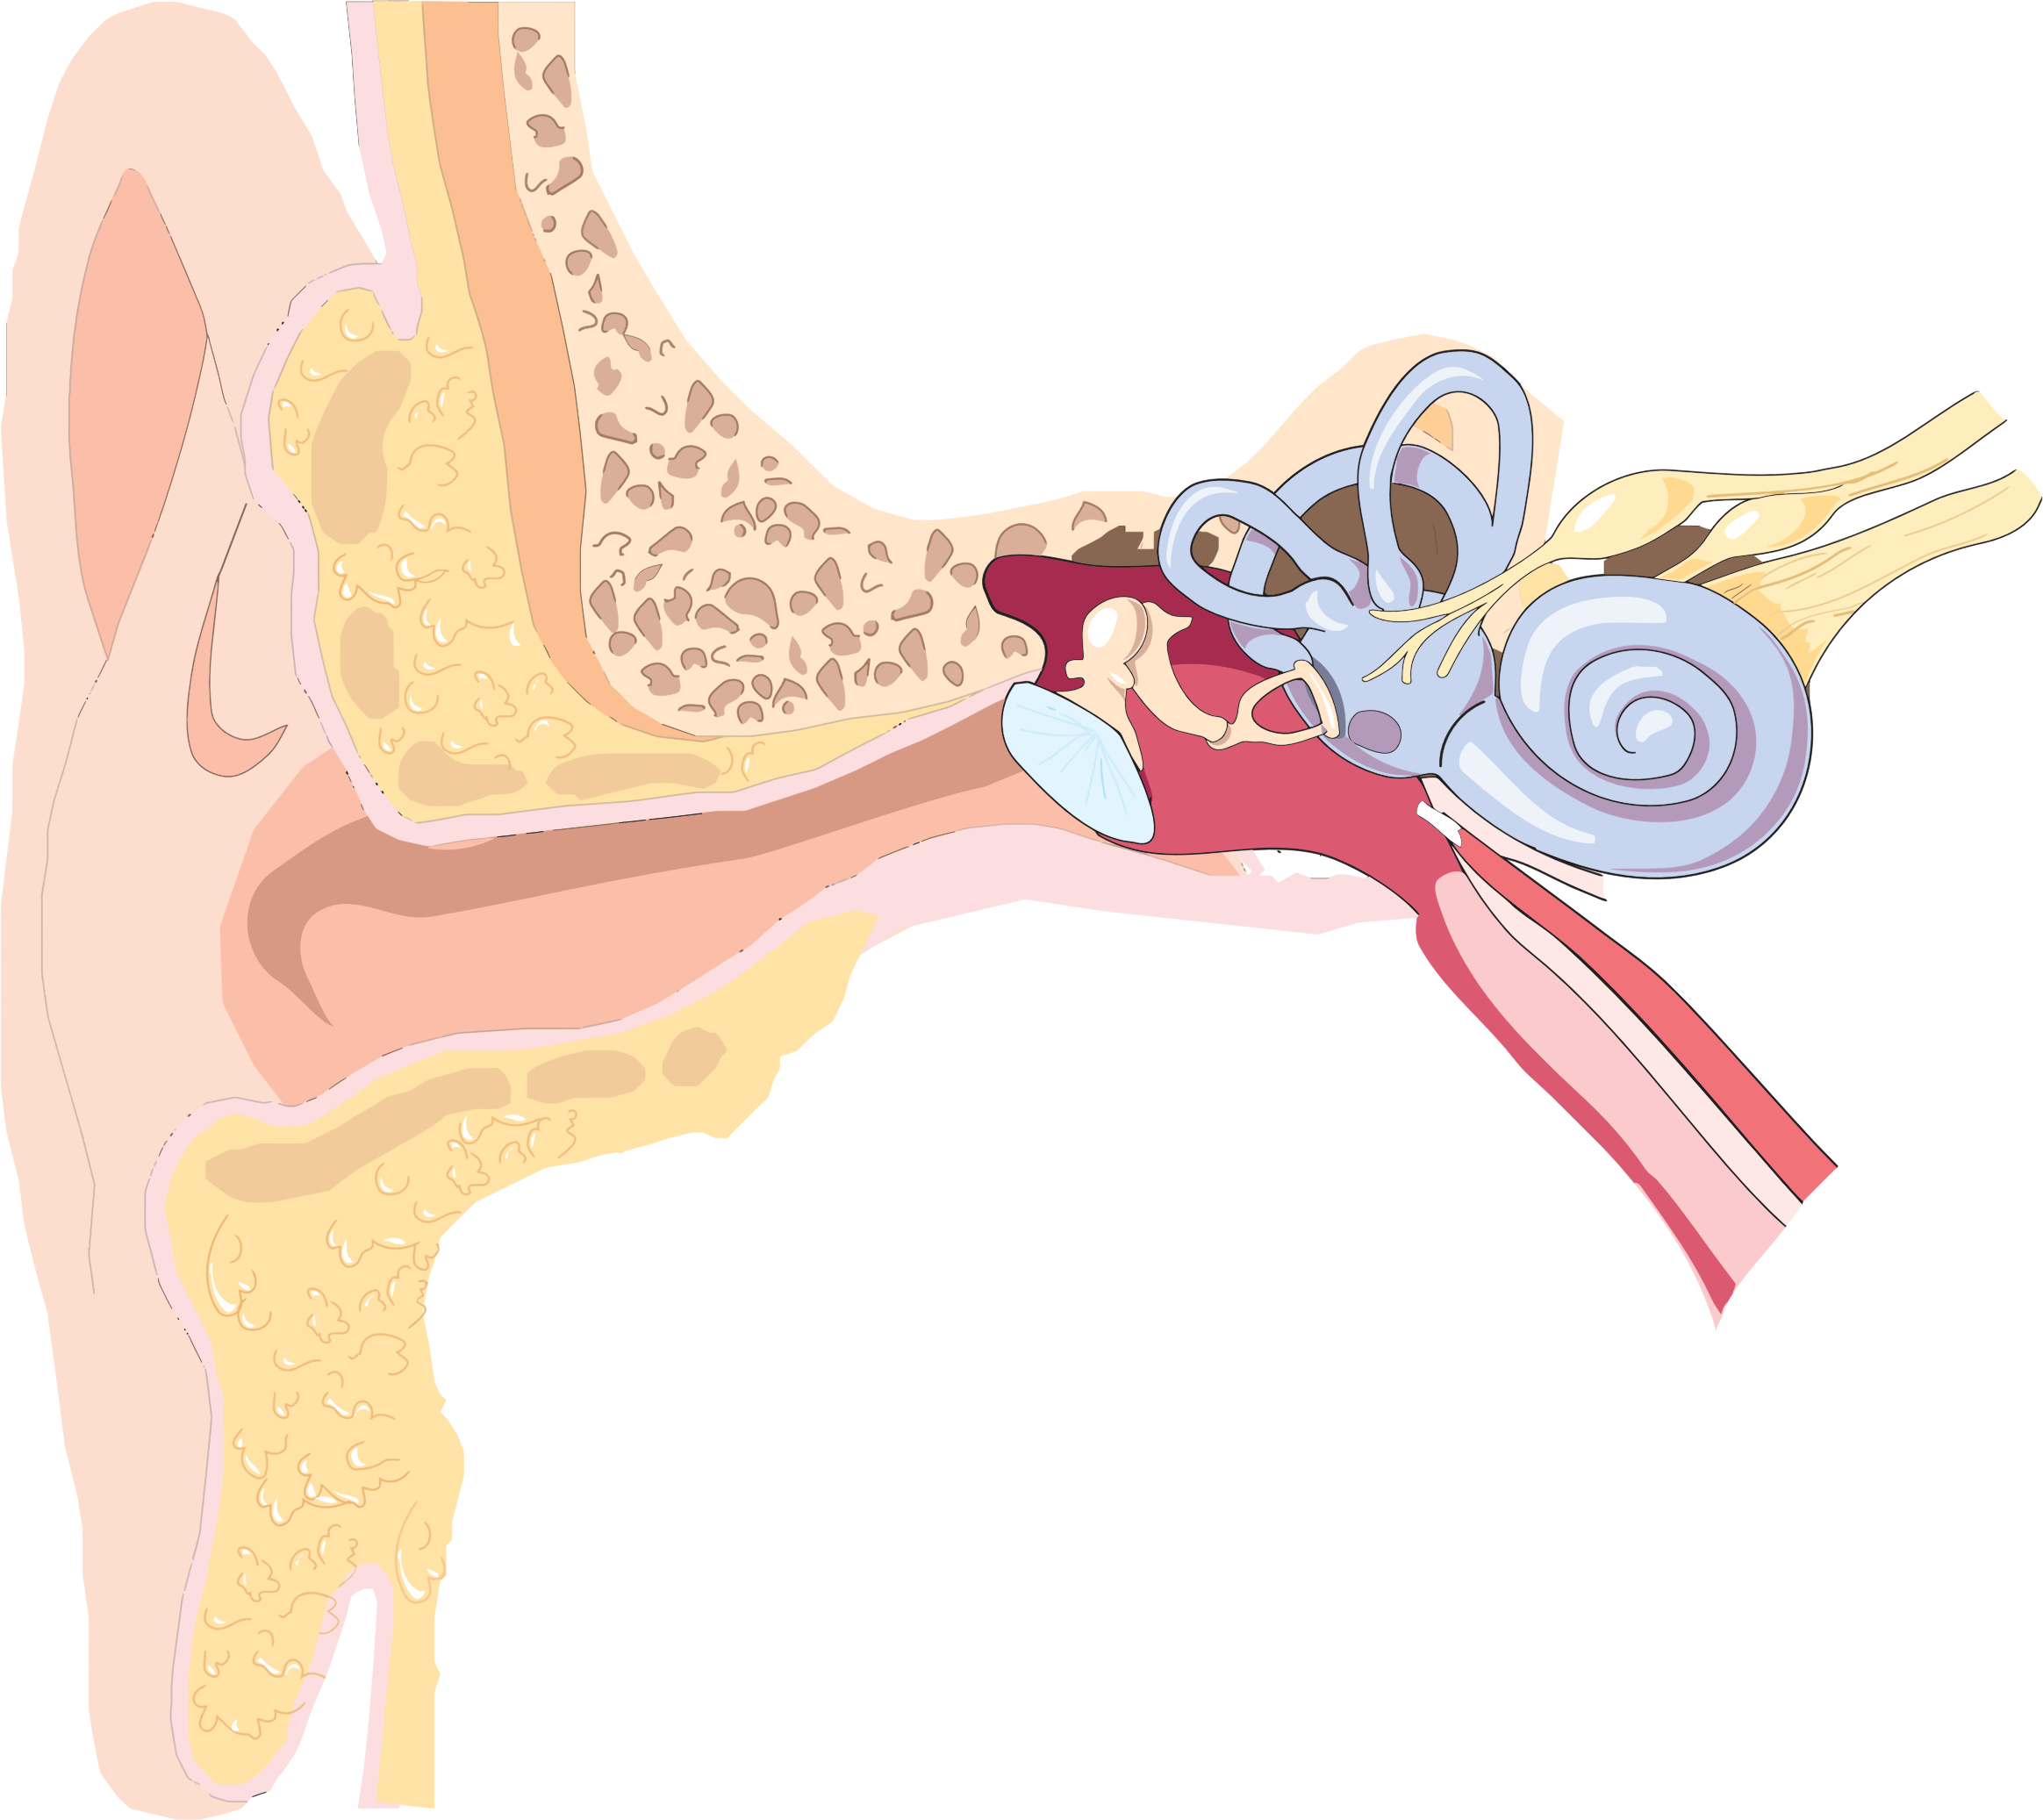 Ear anatomy big image. Human clipart anatomical body